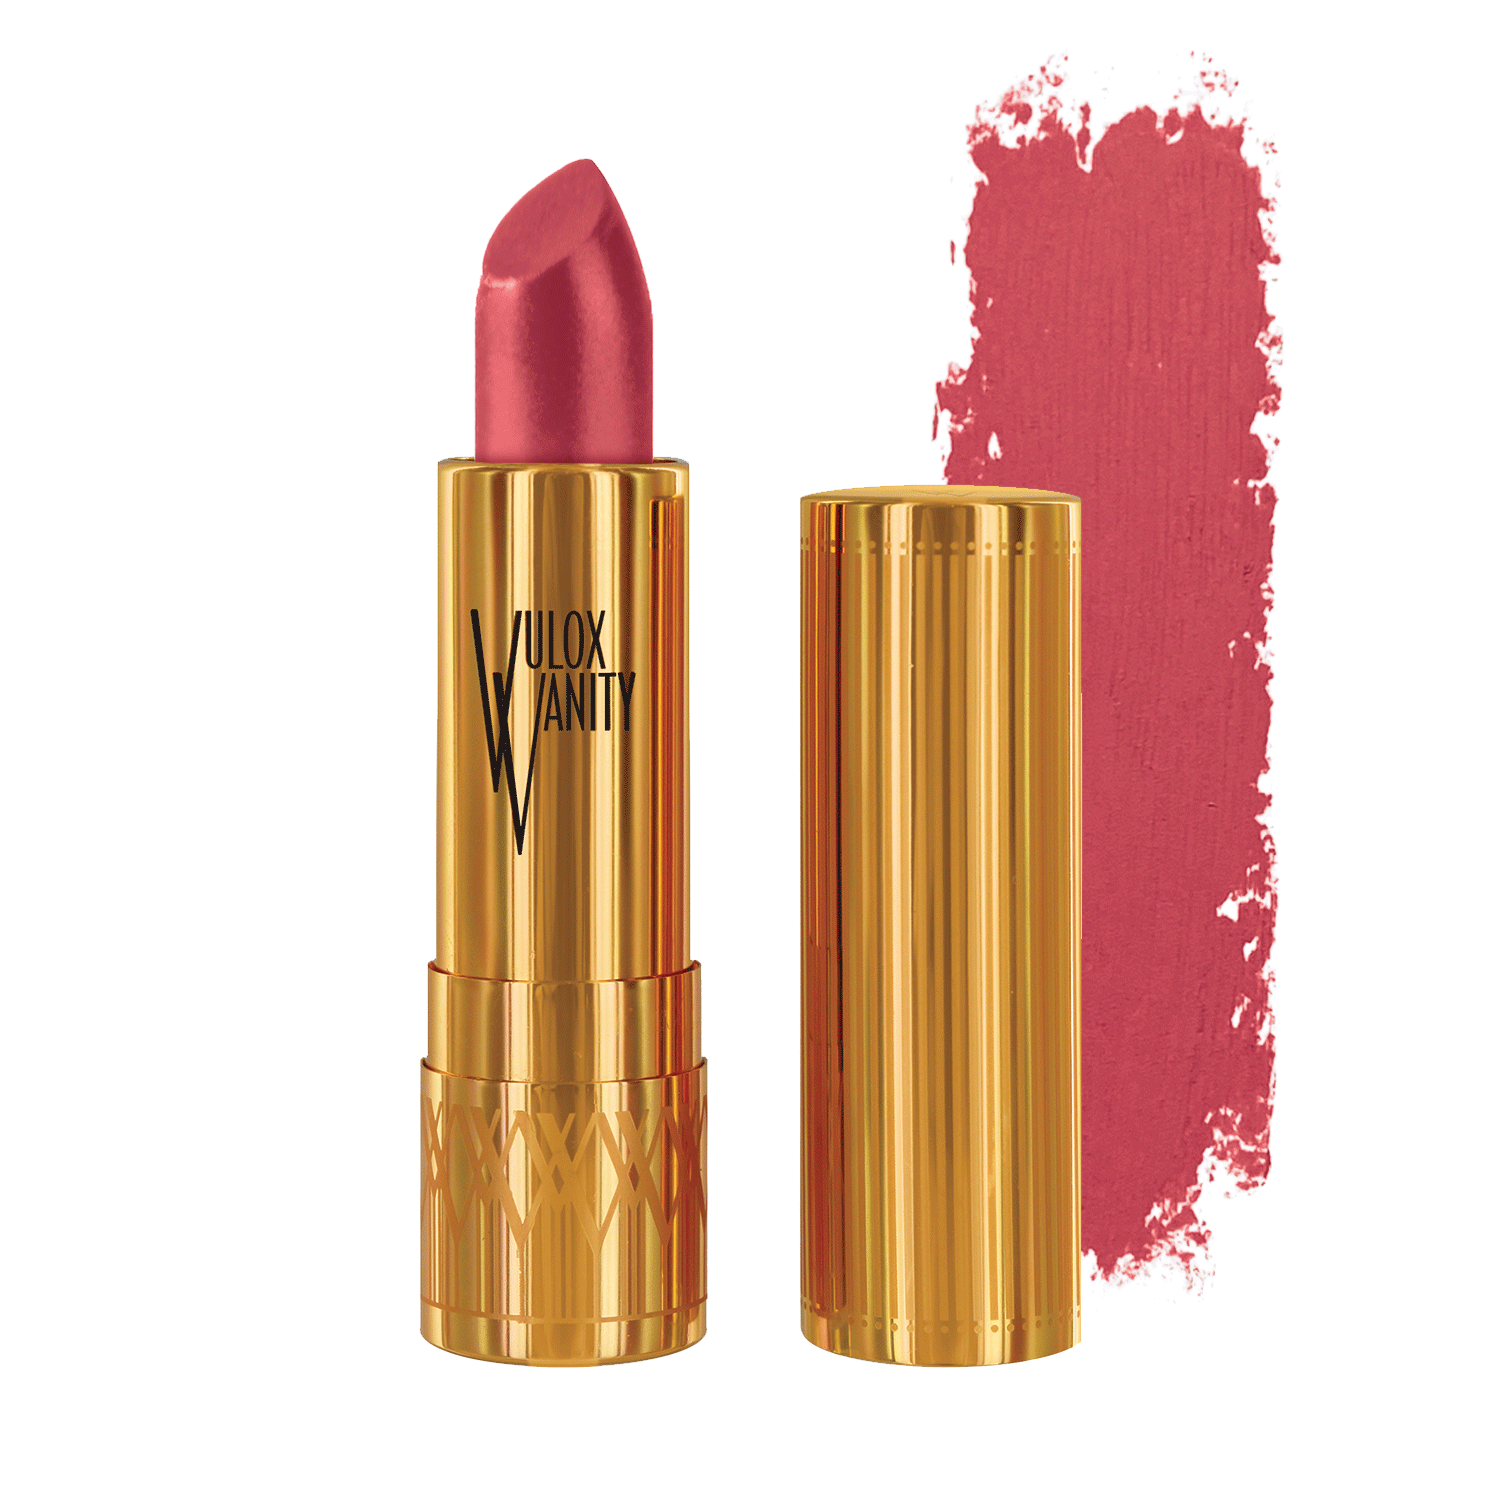 Vulox Vanity Glamour Lipstick in Royal Pink